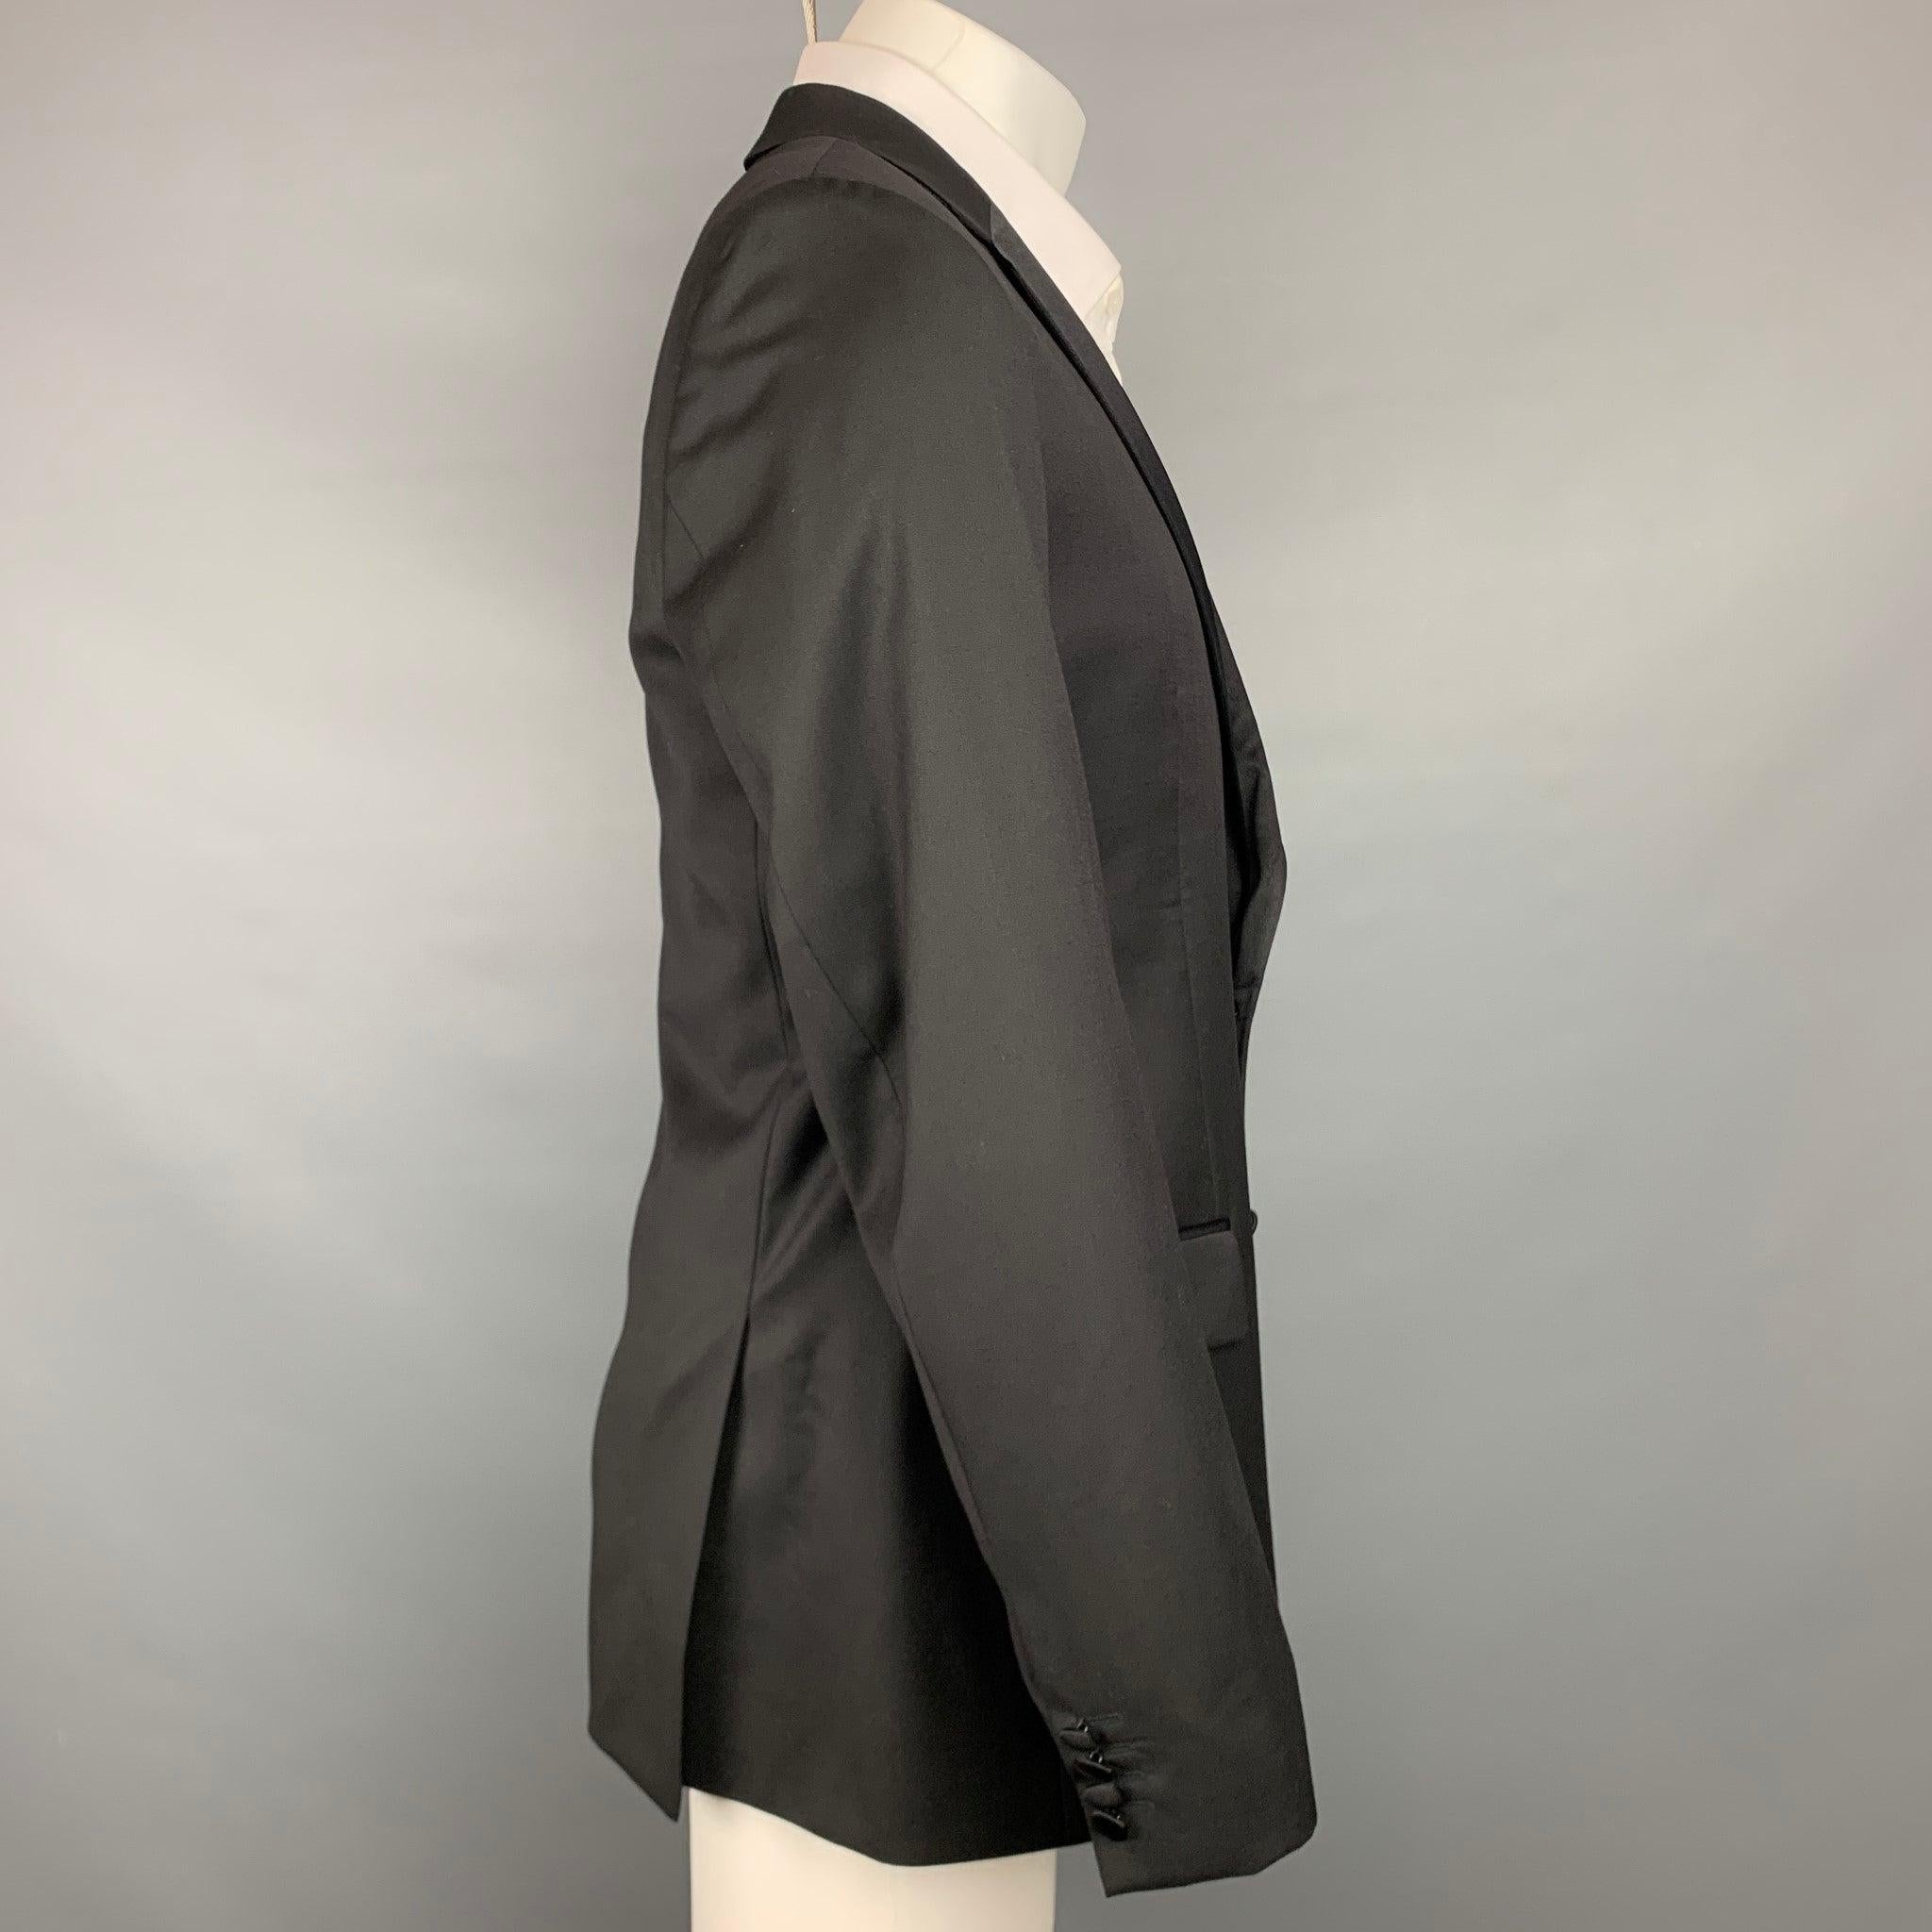 HUGO BOSS Super 120 Size 42 Regular Black Wool Notch Lapel Sport Coat In Good Condition For Sale In San Francisco, CA